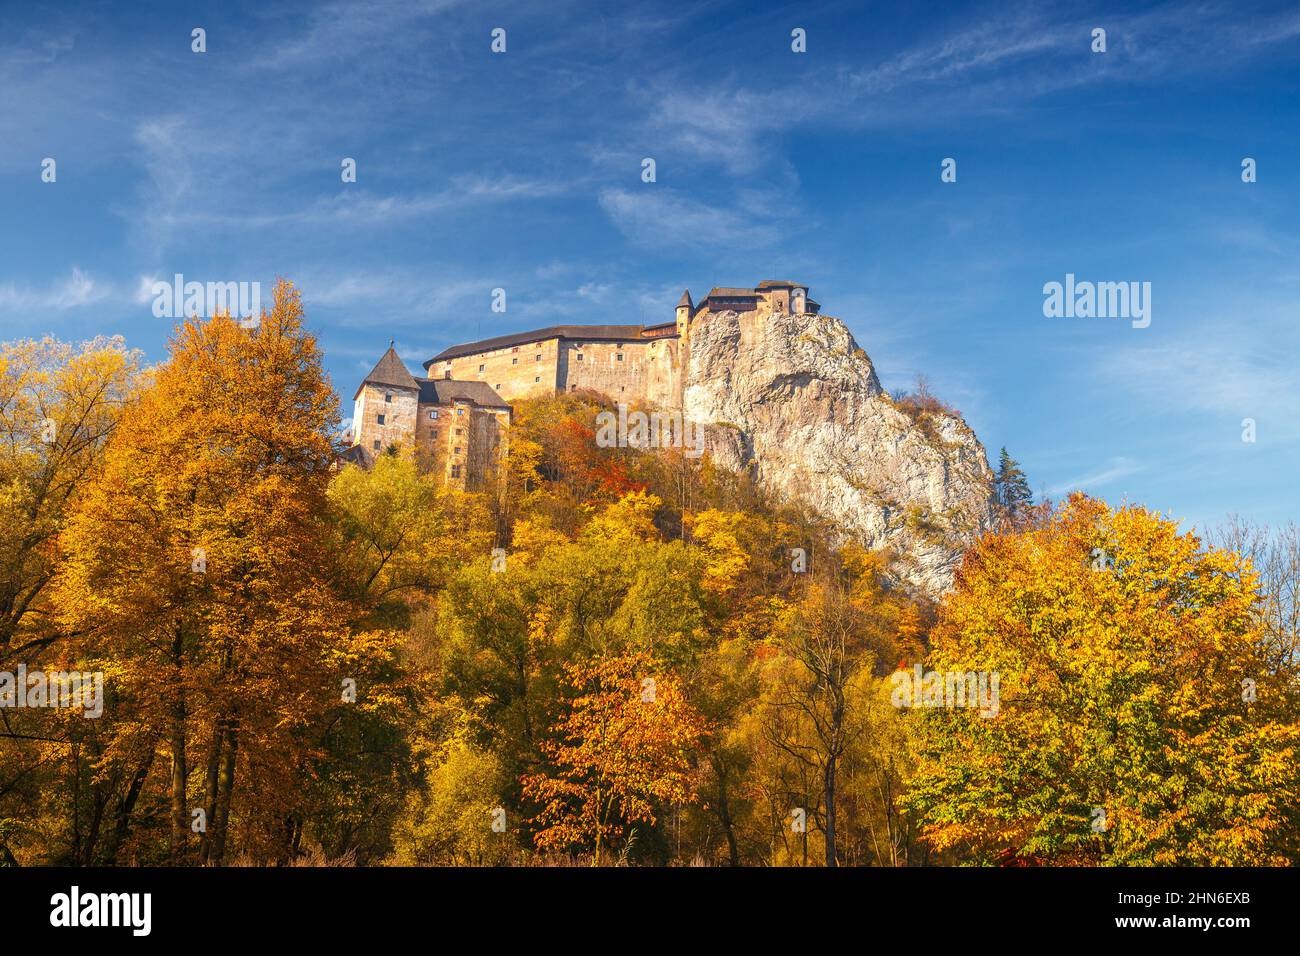 The medieval Orava Castle in autumn, Slovakia, Europe. Stock Photo